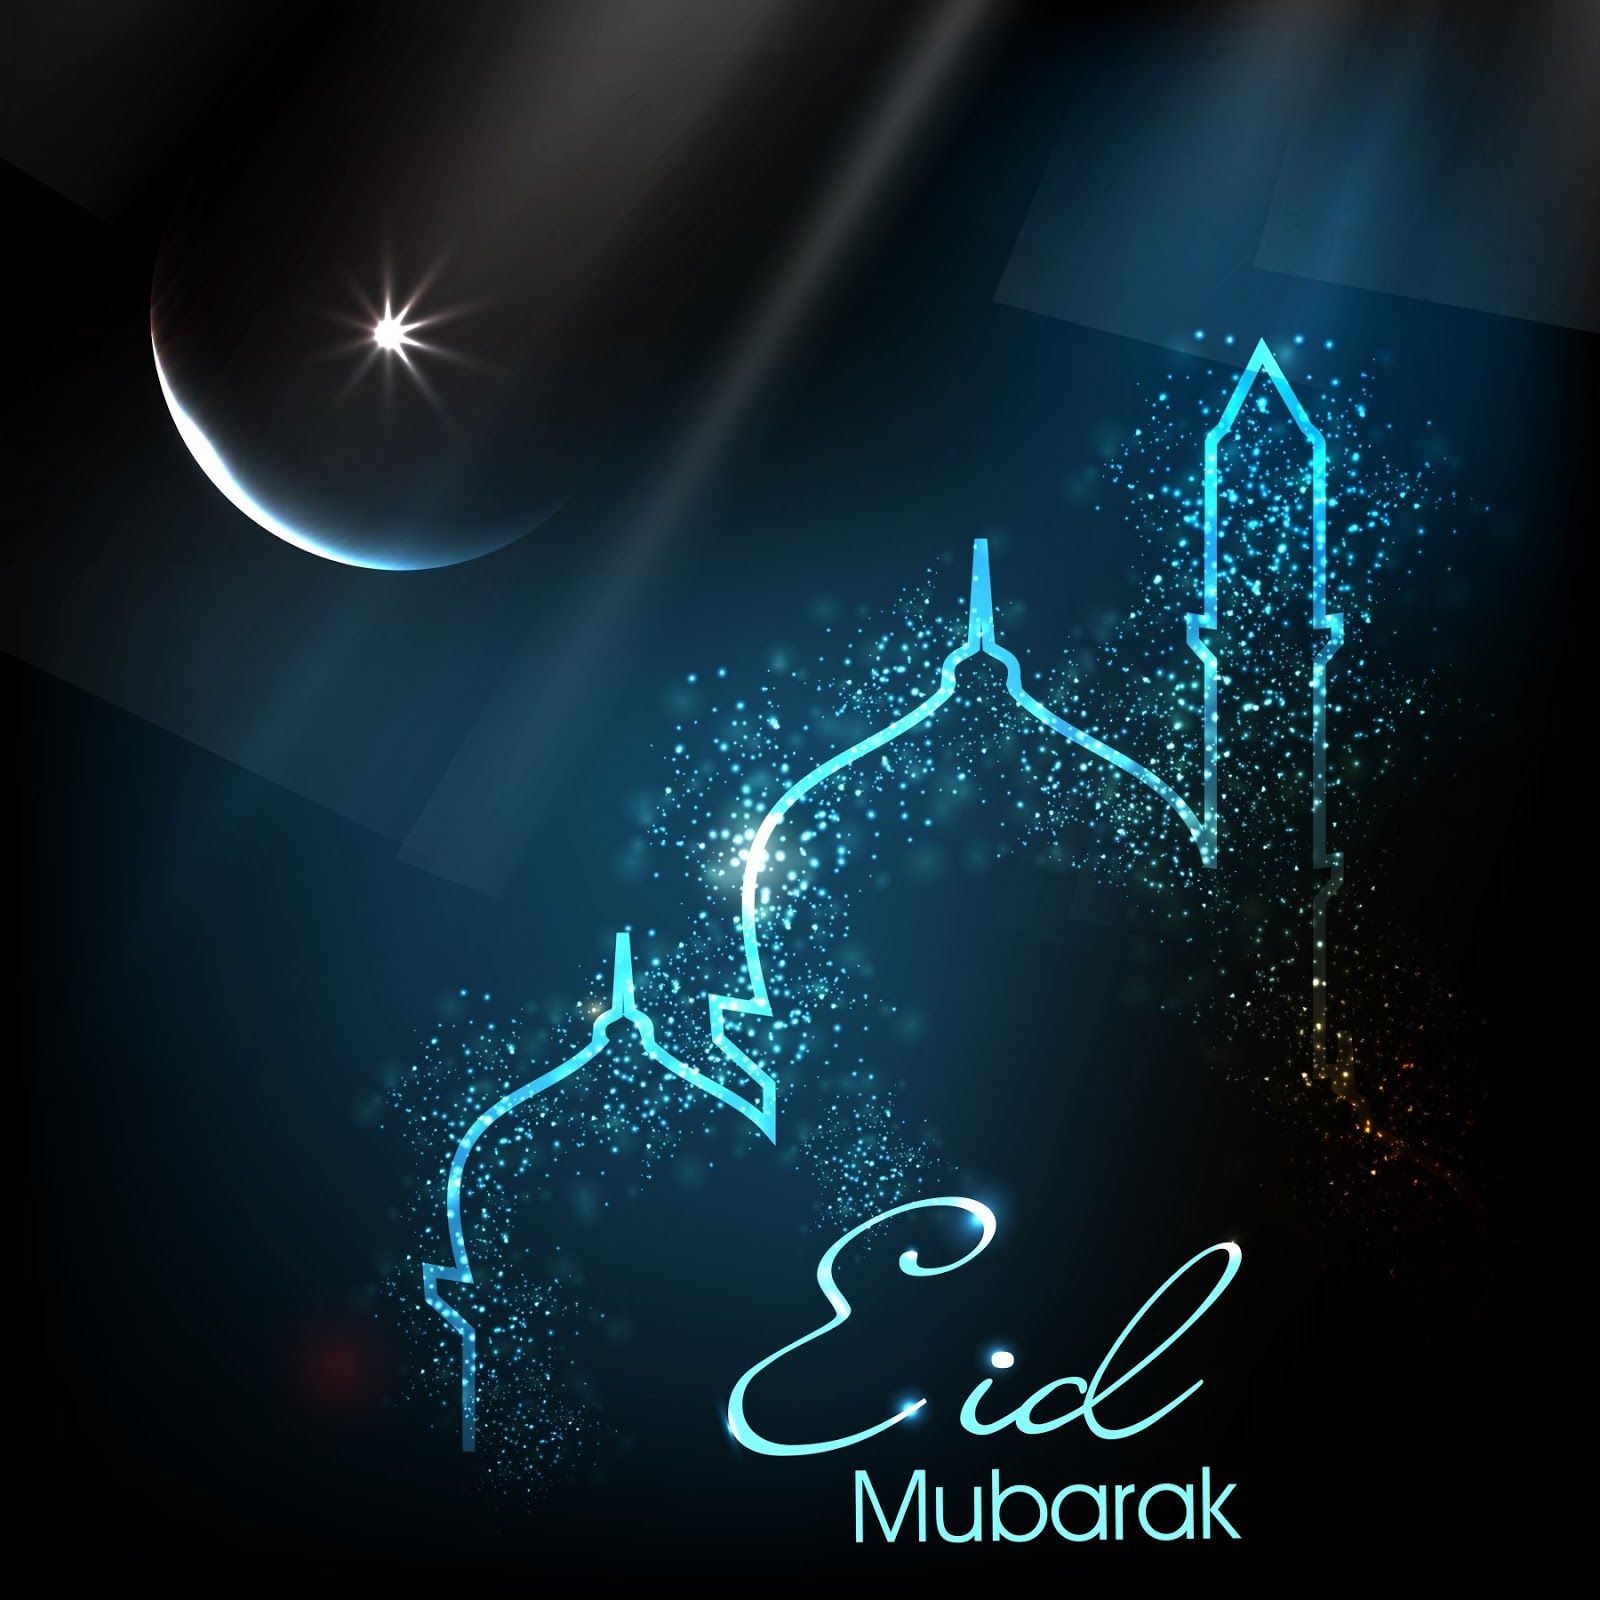 Happy Eid Mubarak Image Live Wallpaper HD. Eid mubarak wishes, Happy eid mubarak, Eid mubarak image